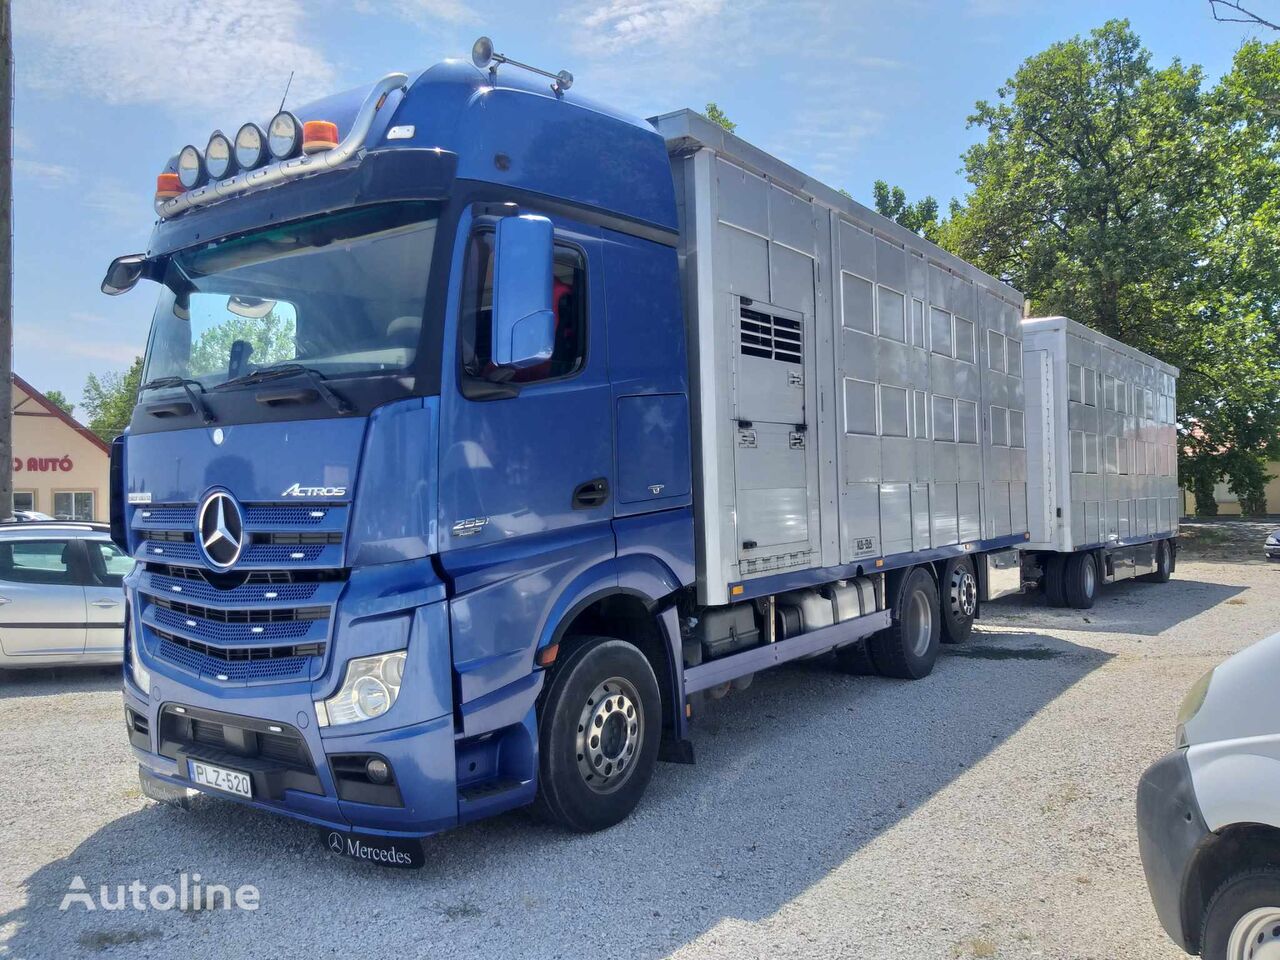 Mercedes-Benz Actros 2551 livestock truck + livestock trailer